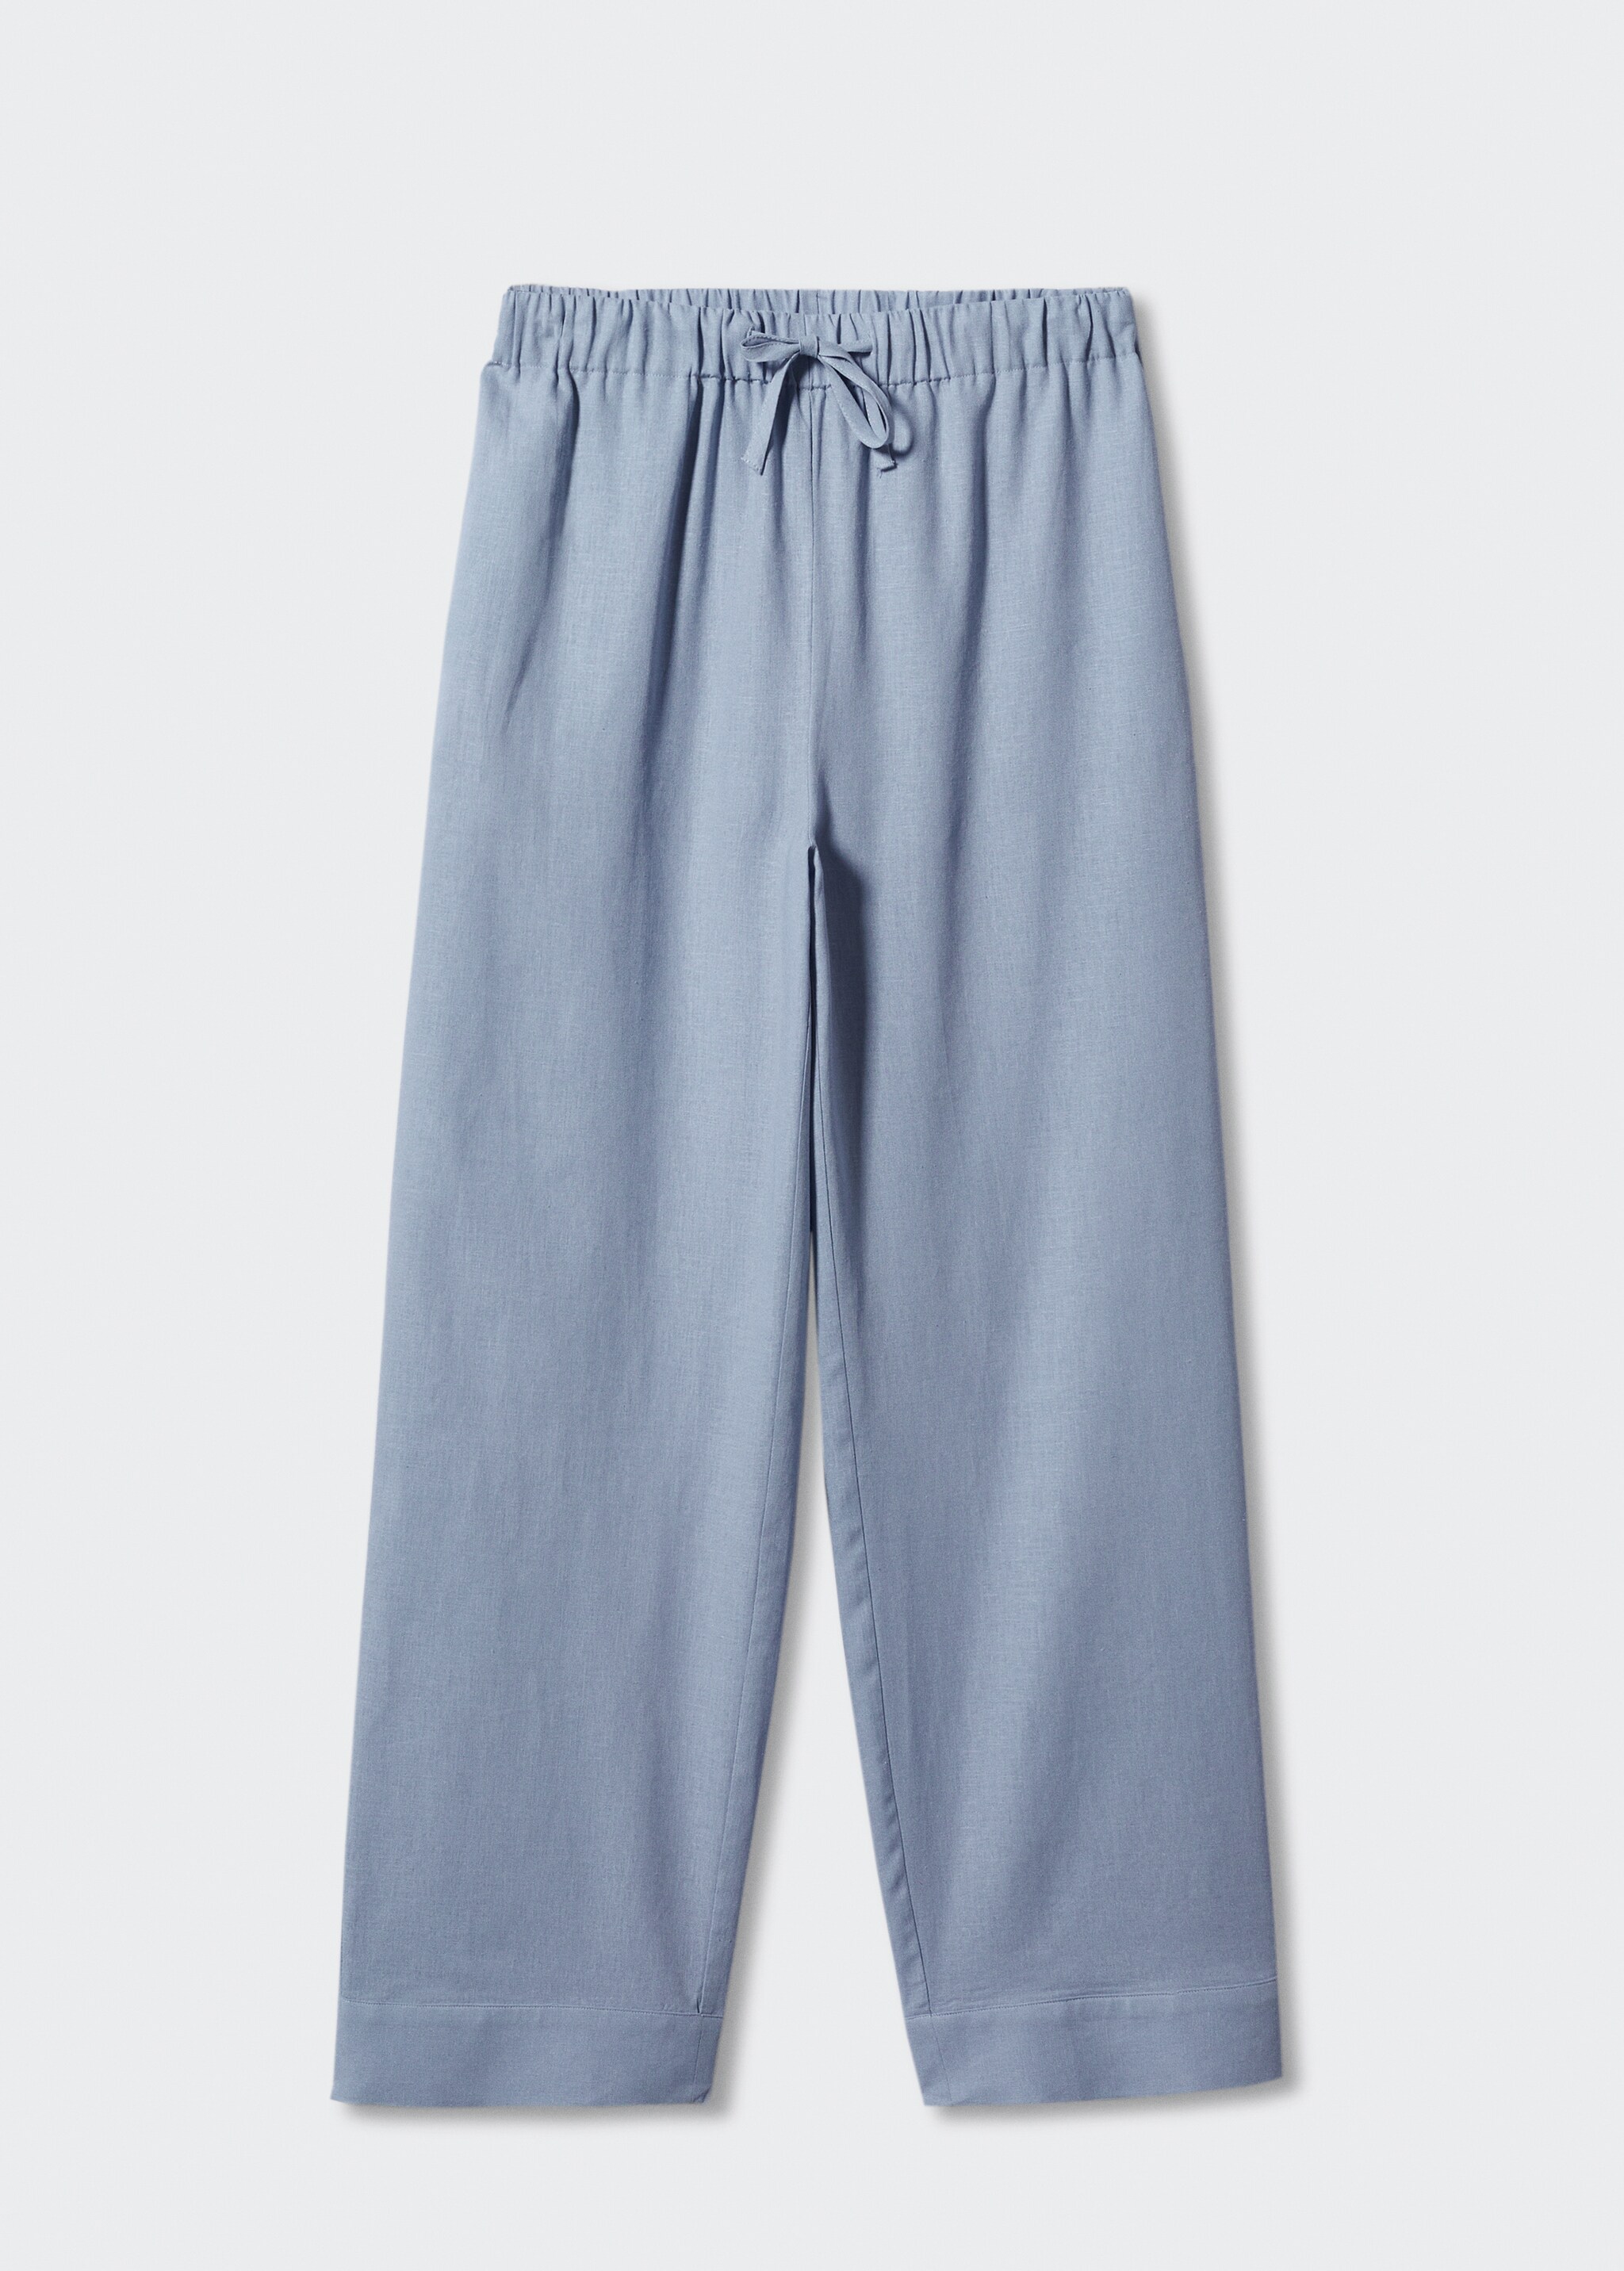 Pantalón pijama lino - Artículo sin modelo